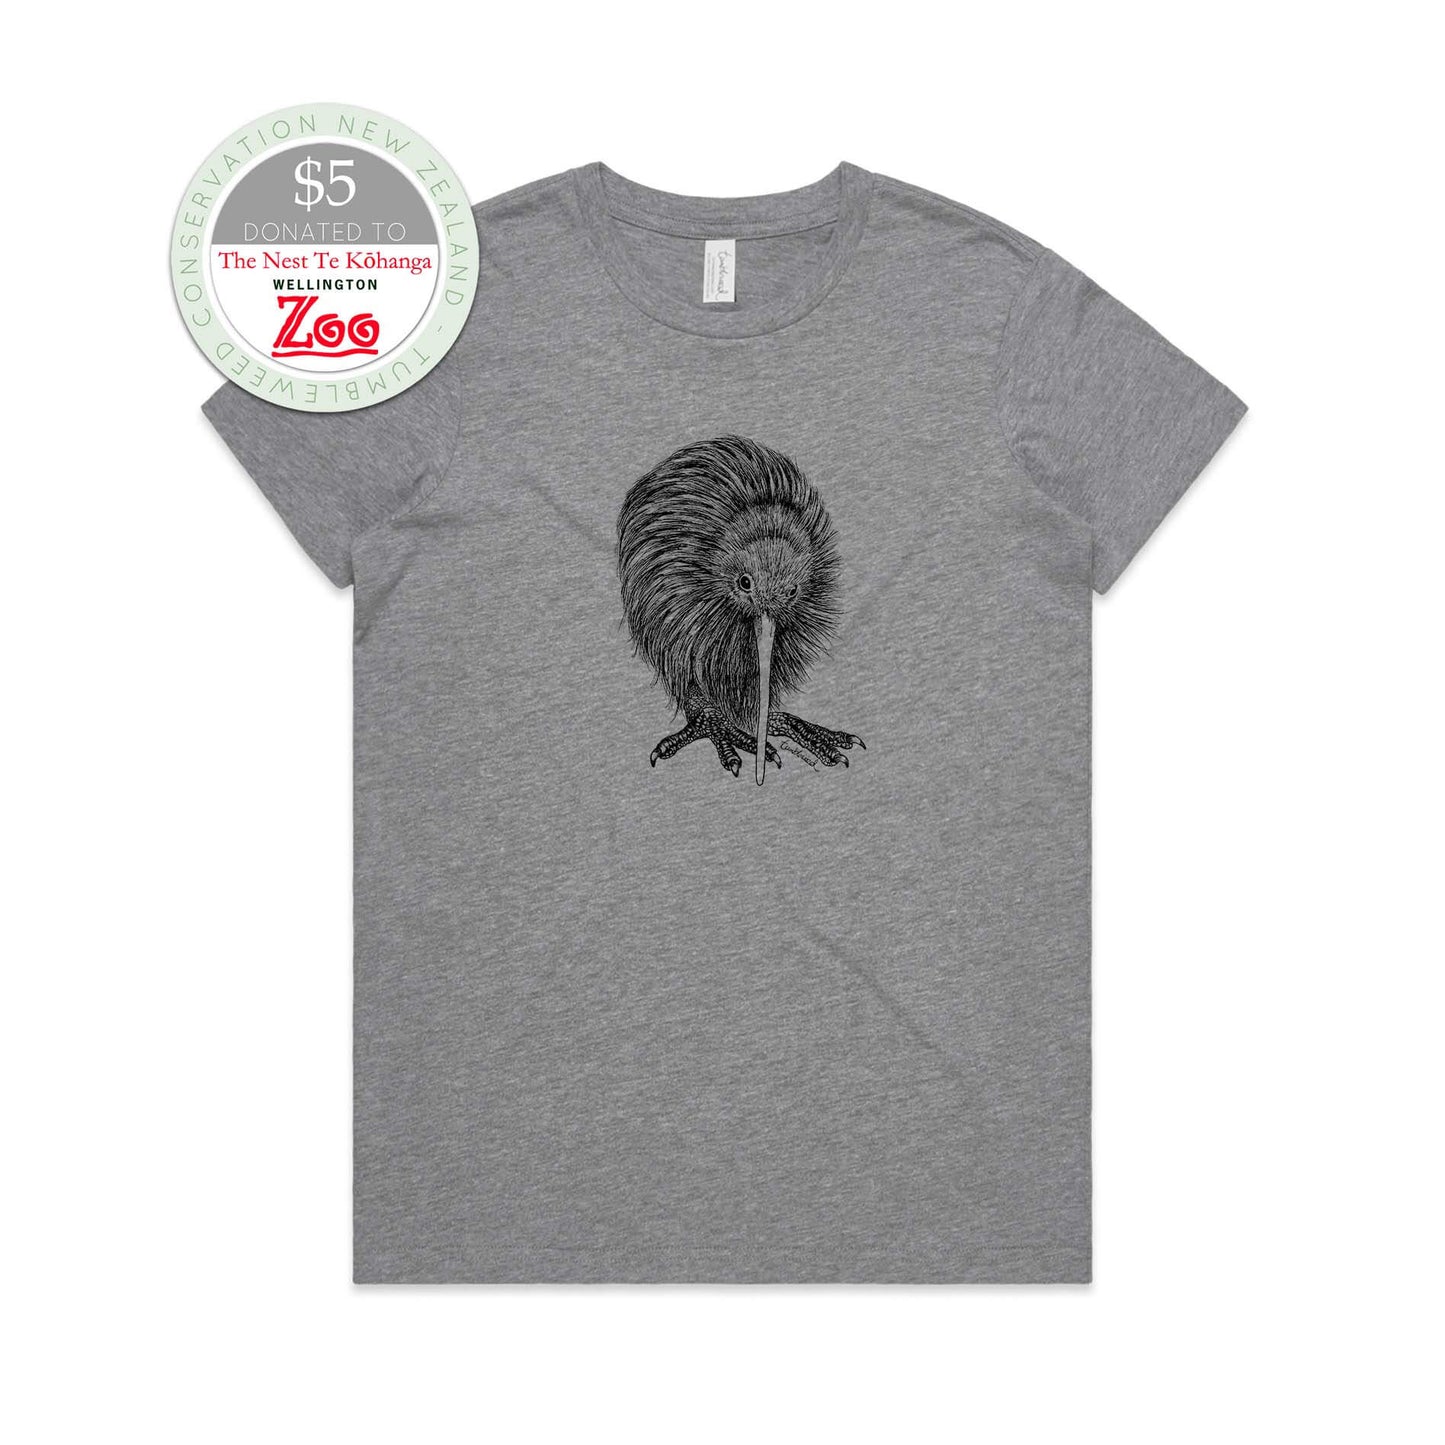 Grey marle, female t-shirt featuring a screen printed kiwi design.